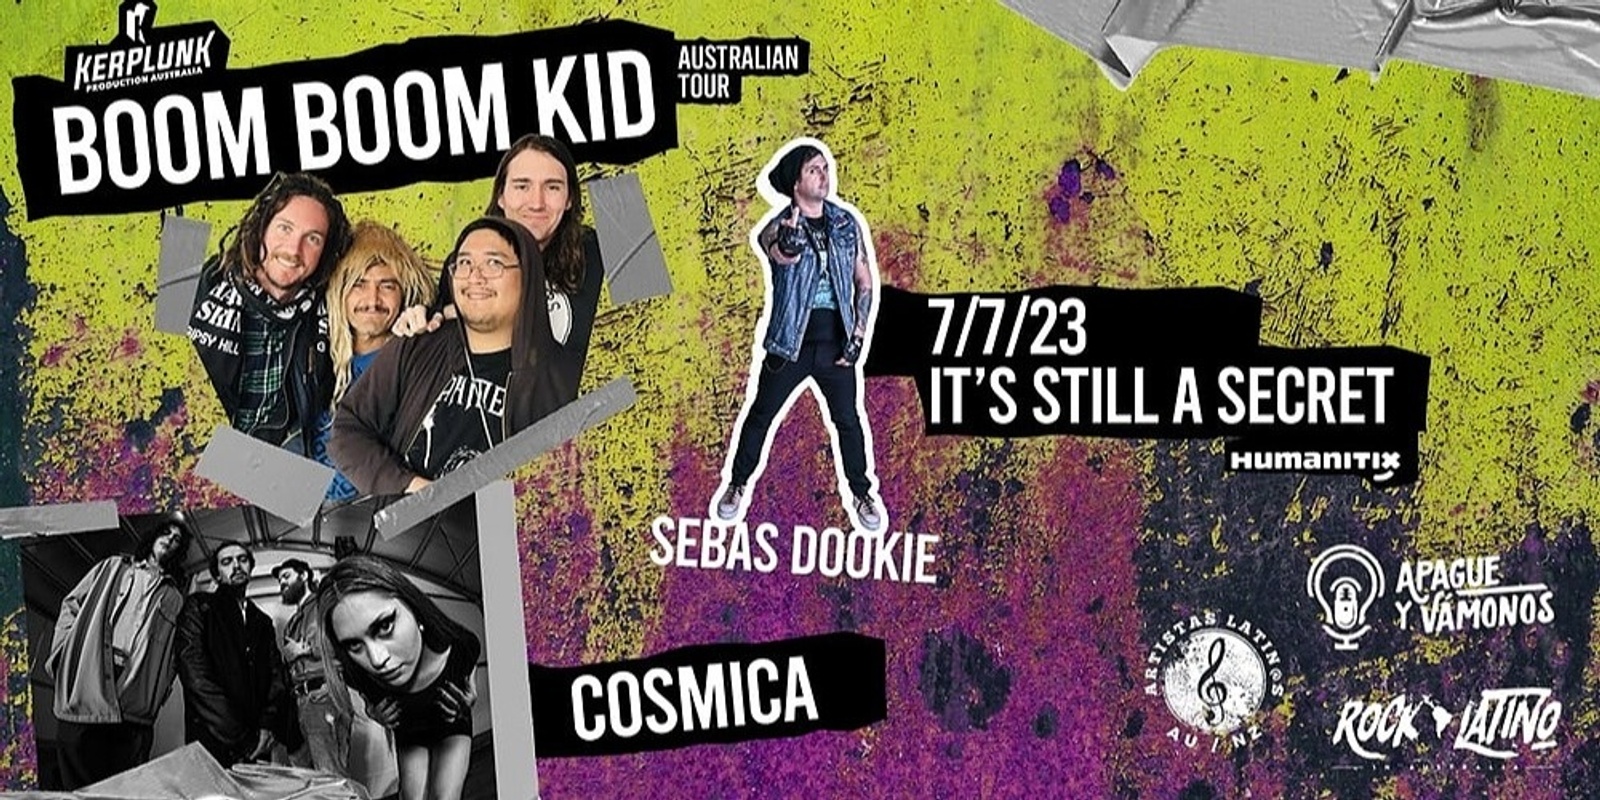 Boom Boom Kid ( Australian tour)